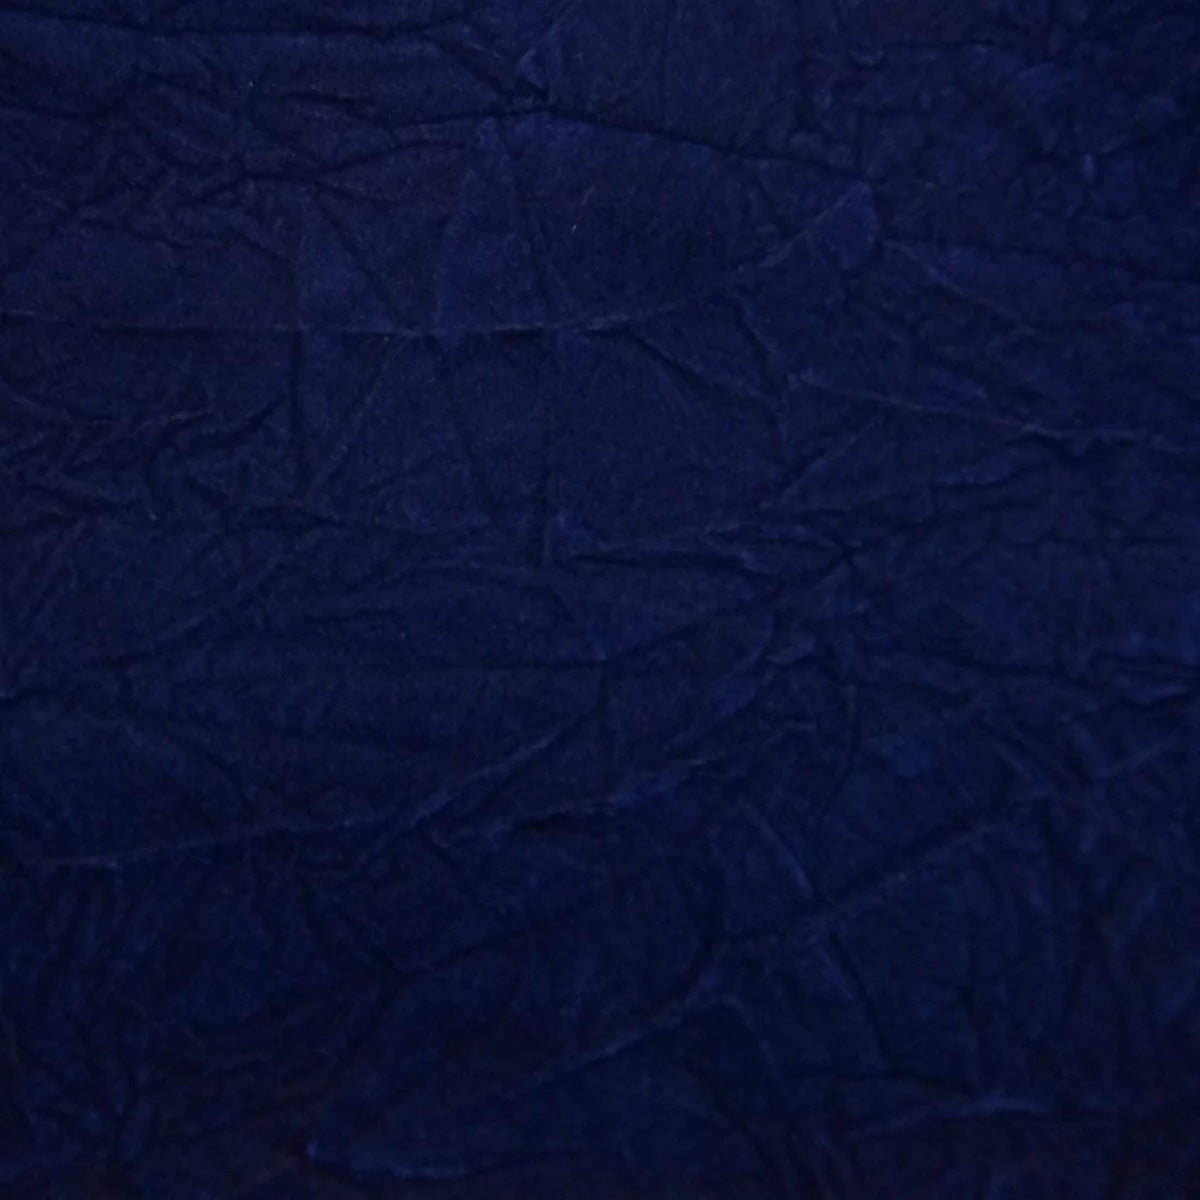 Royal Blue Velvet by the Yard - J S International Textile